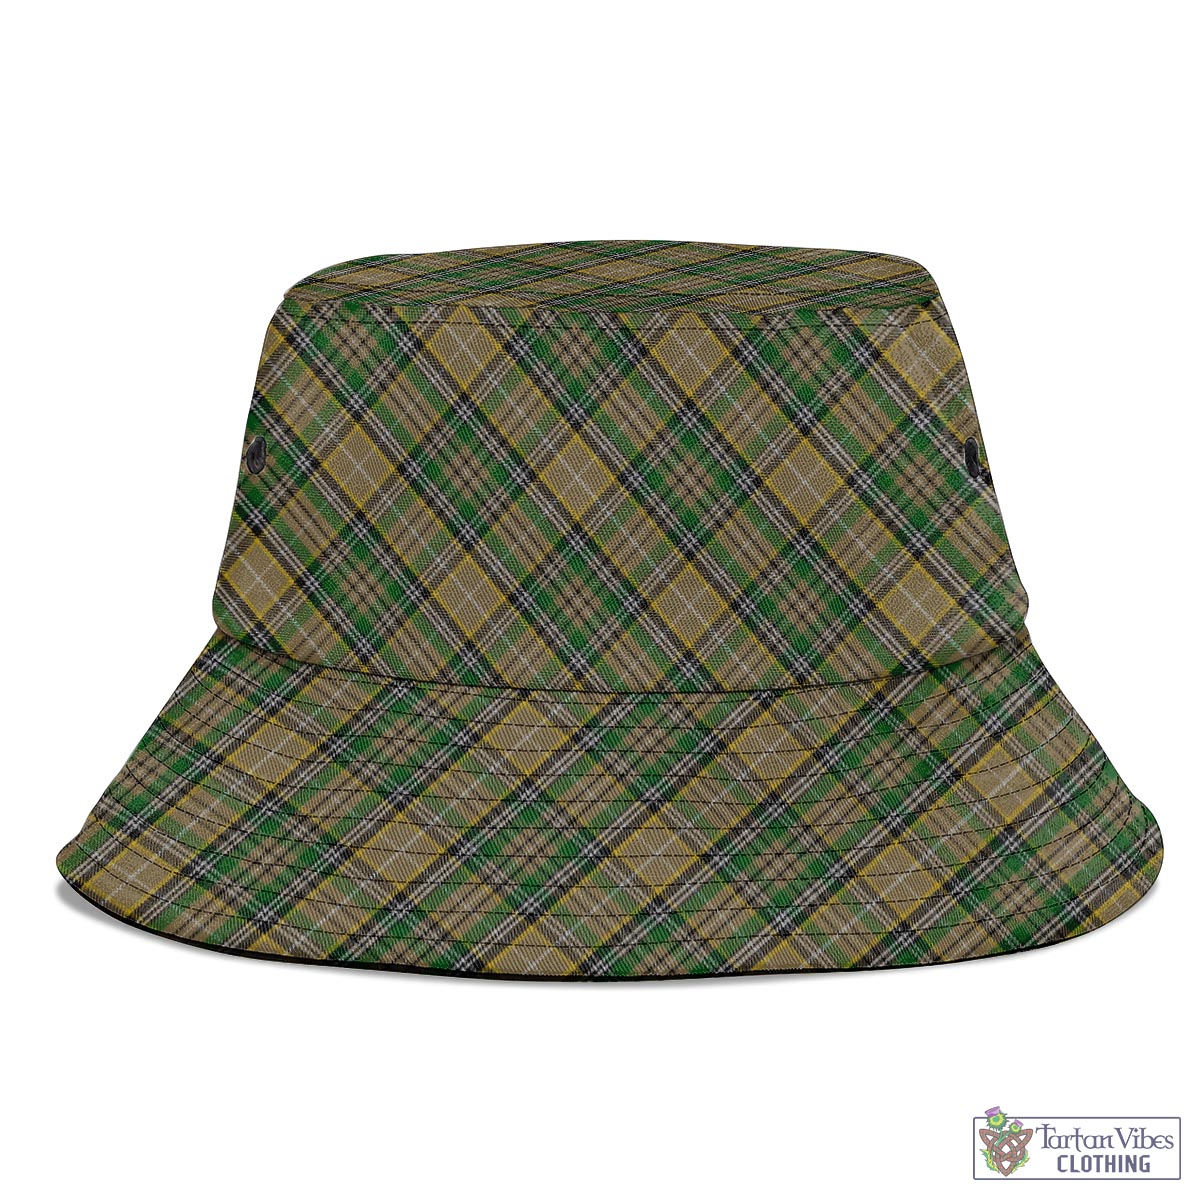 Tartan Vibes Clothing O'Farrell Tartan Bucket Hat